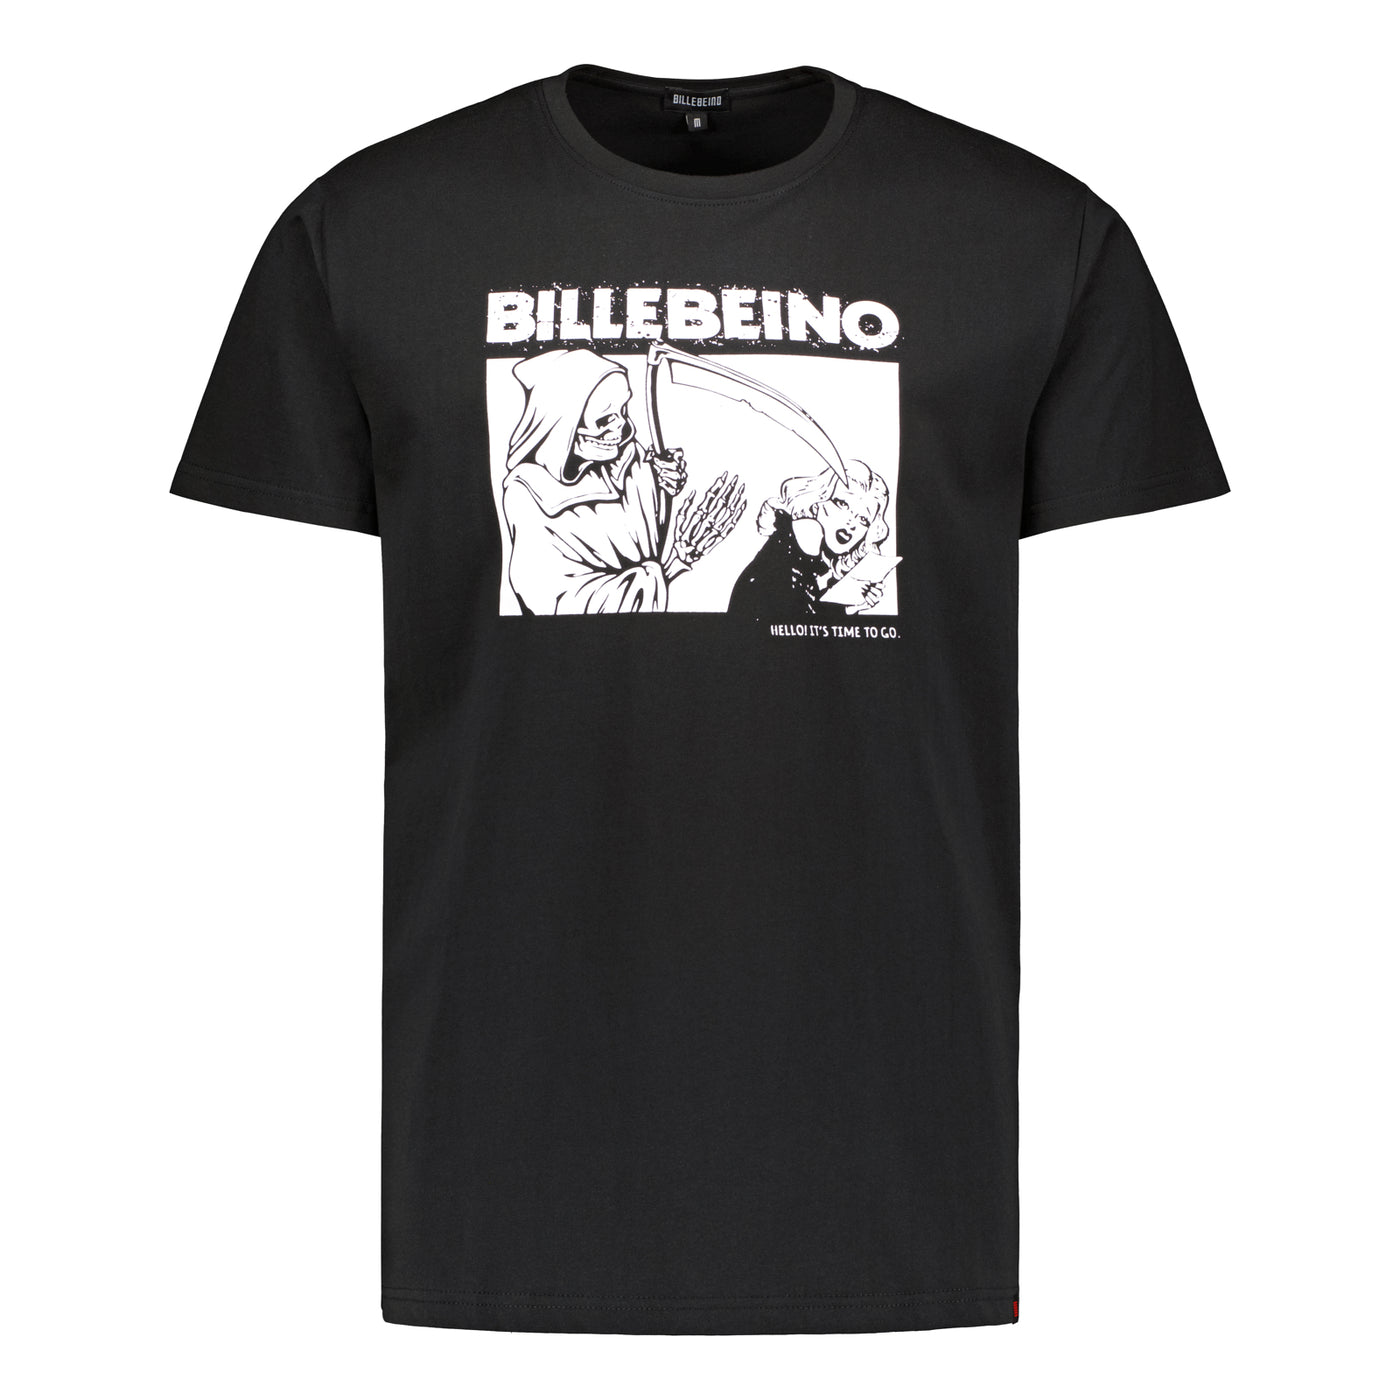 Time To Go T-shirt Billebeino